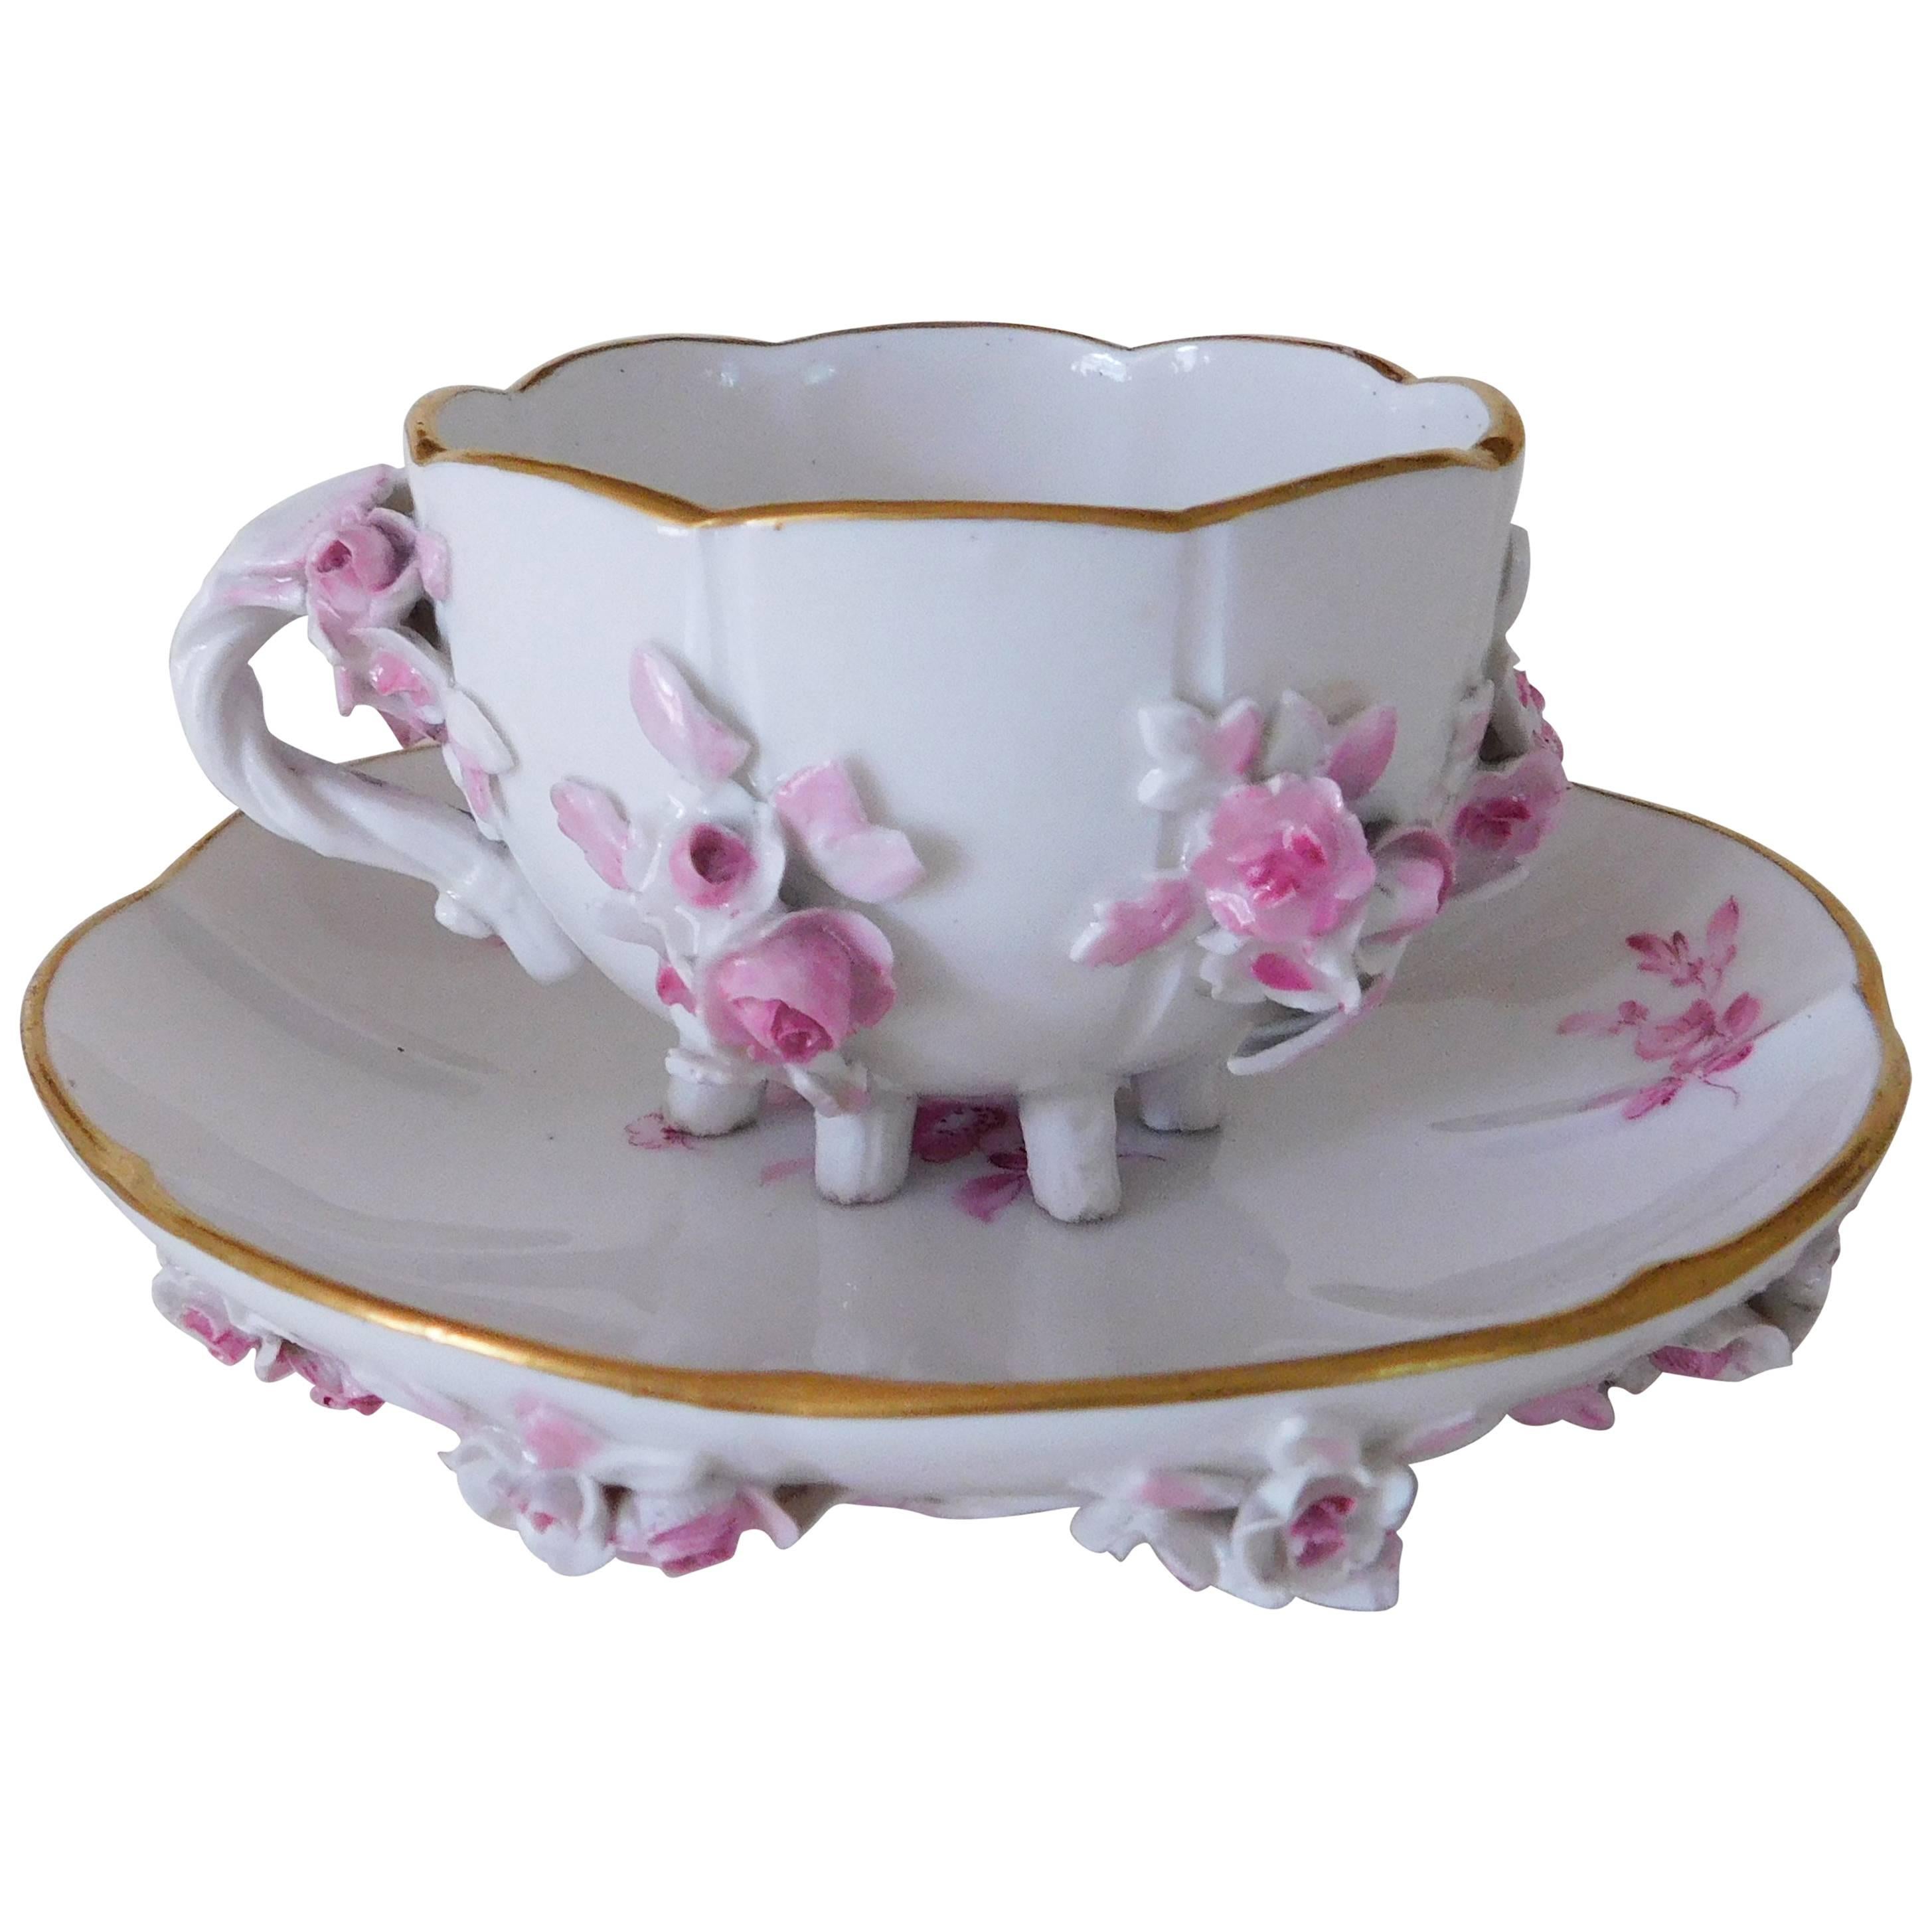 19th Century Meissen Porcelain Floral Teacup and Saucer For Sale